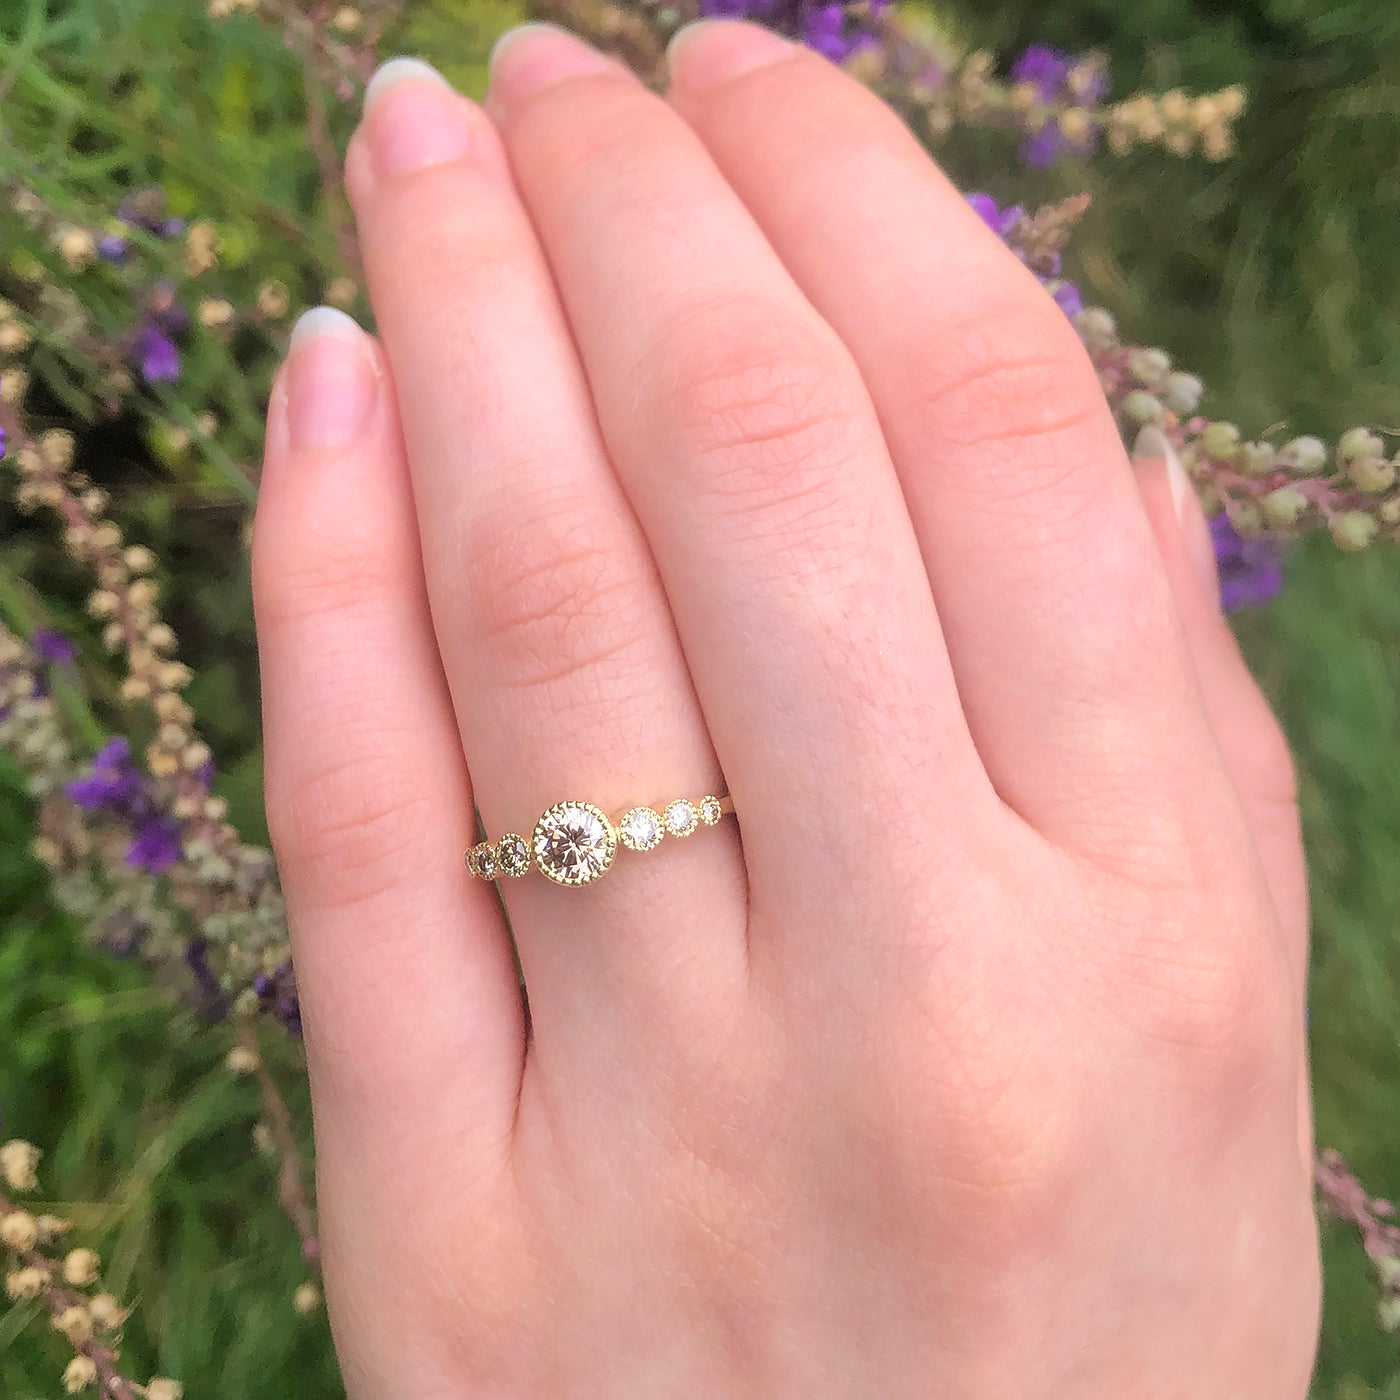 18ct Gold 7-Stone Champagne Diamond Engagement Ring (Size M, Resize K - O)